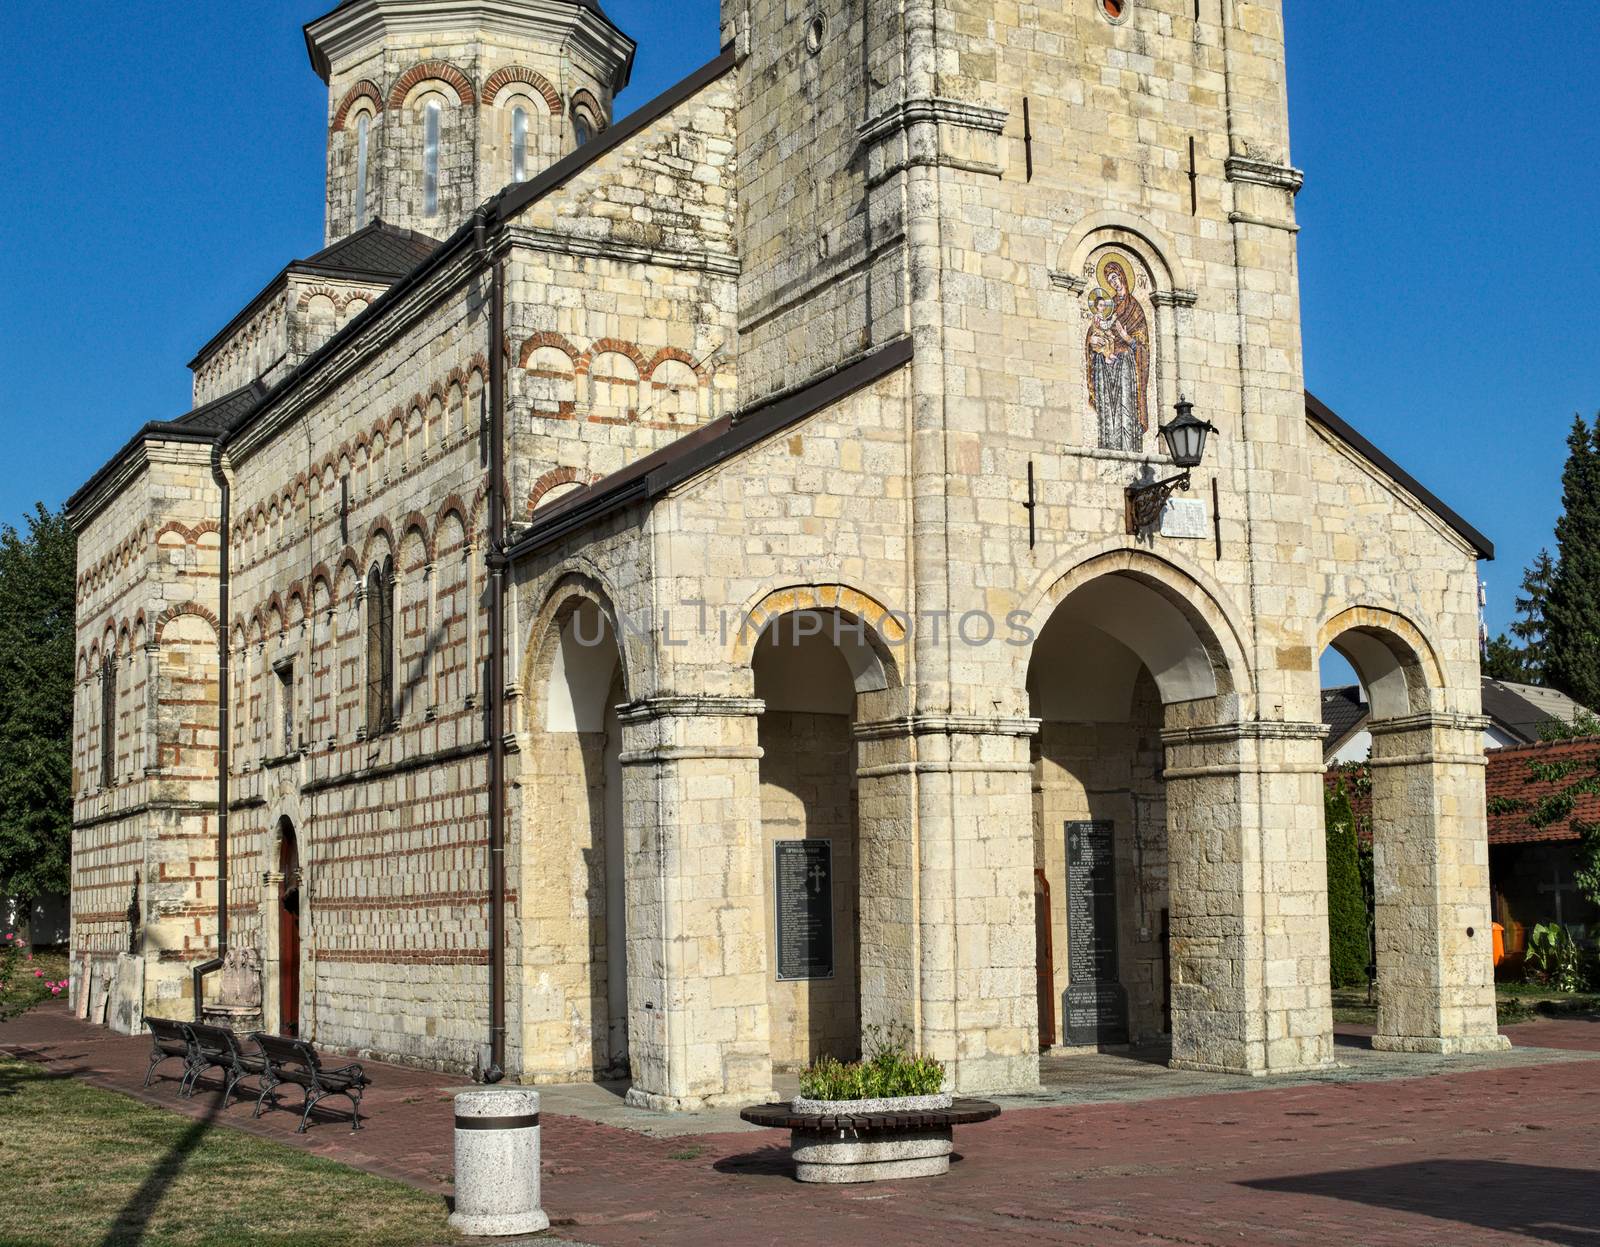 Orthodox stone church in Sremska Kamenica, Serbia by sheriffkule